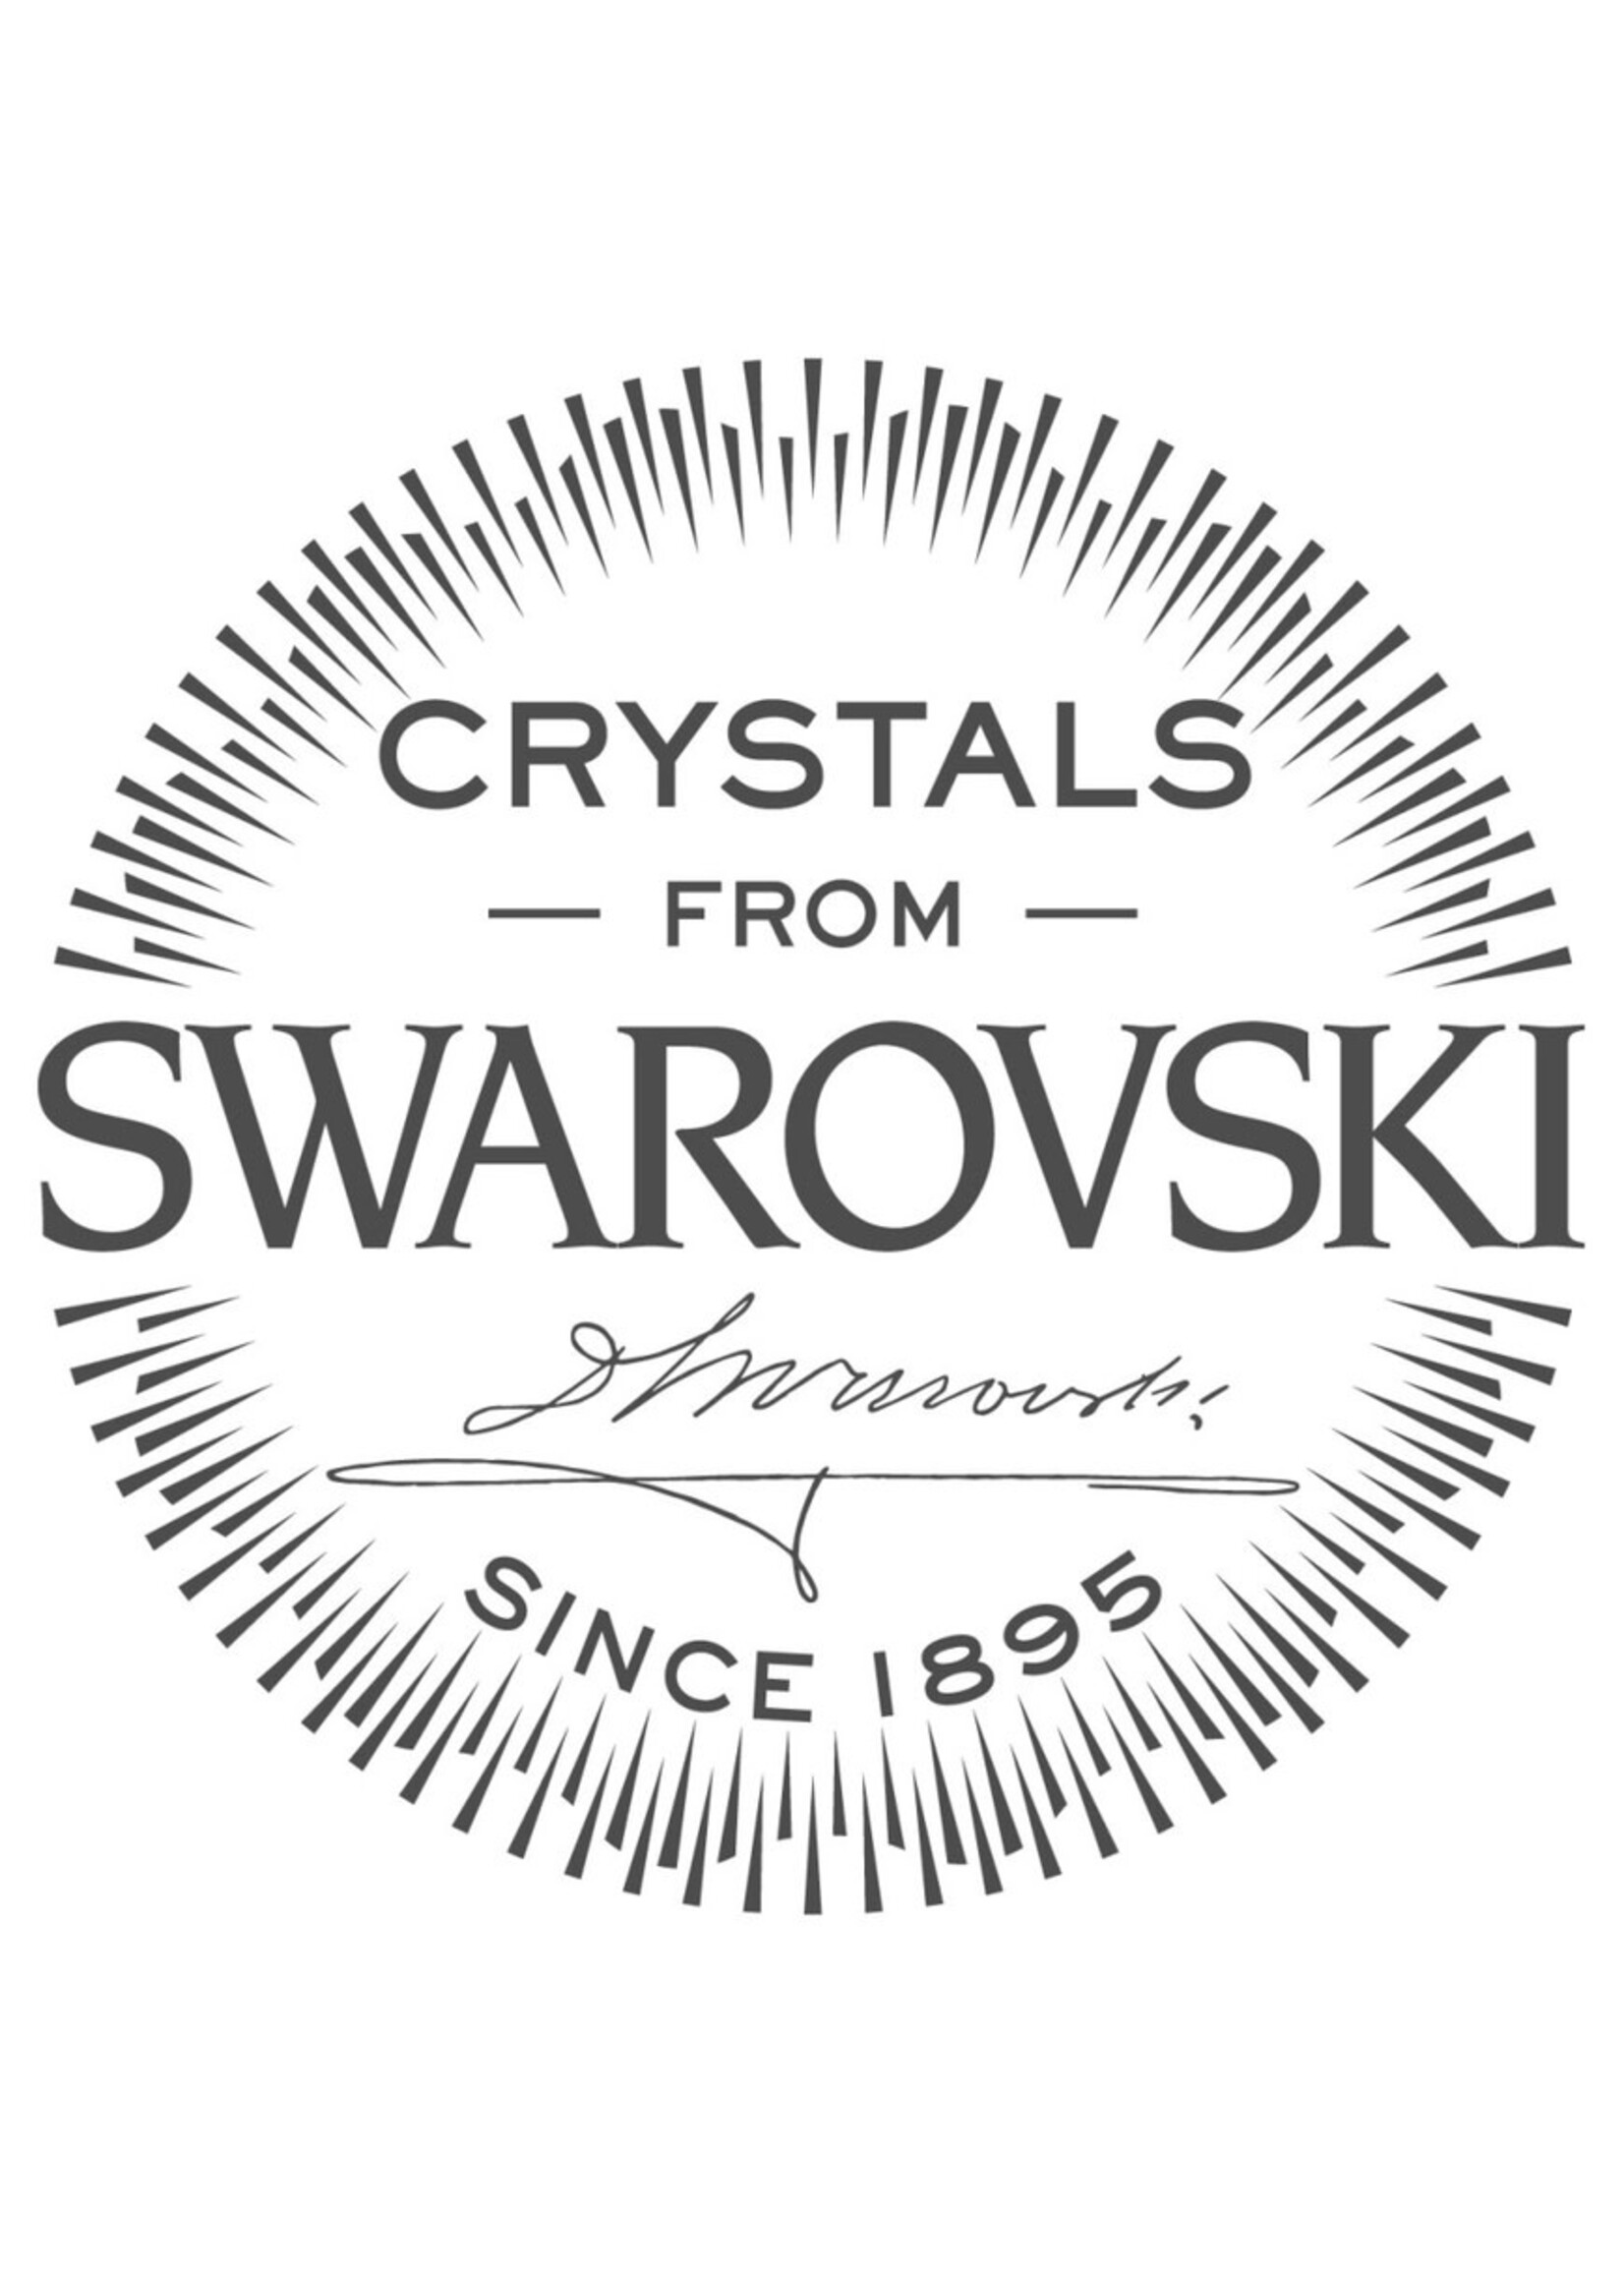 Glimmering Swarovski® Crystal Flower Earrings Rhodium Plated Brass